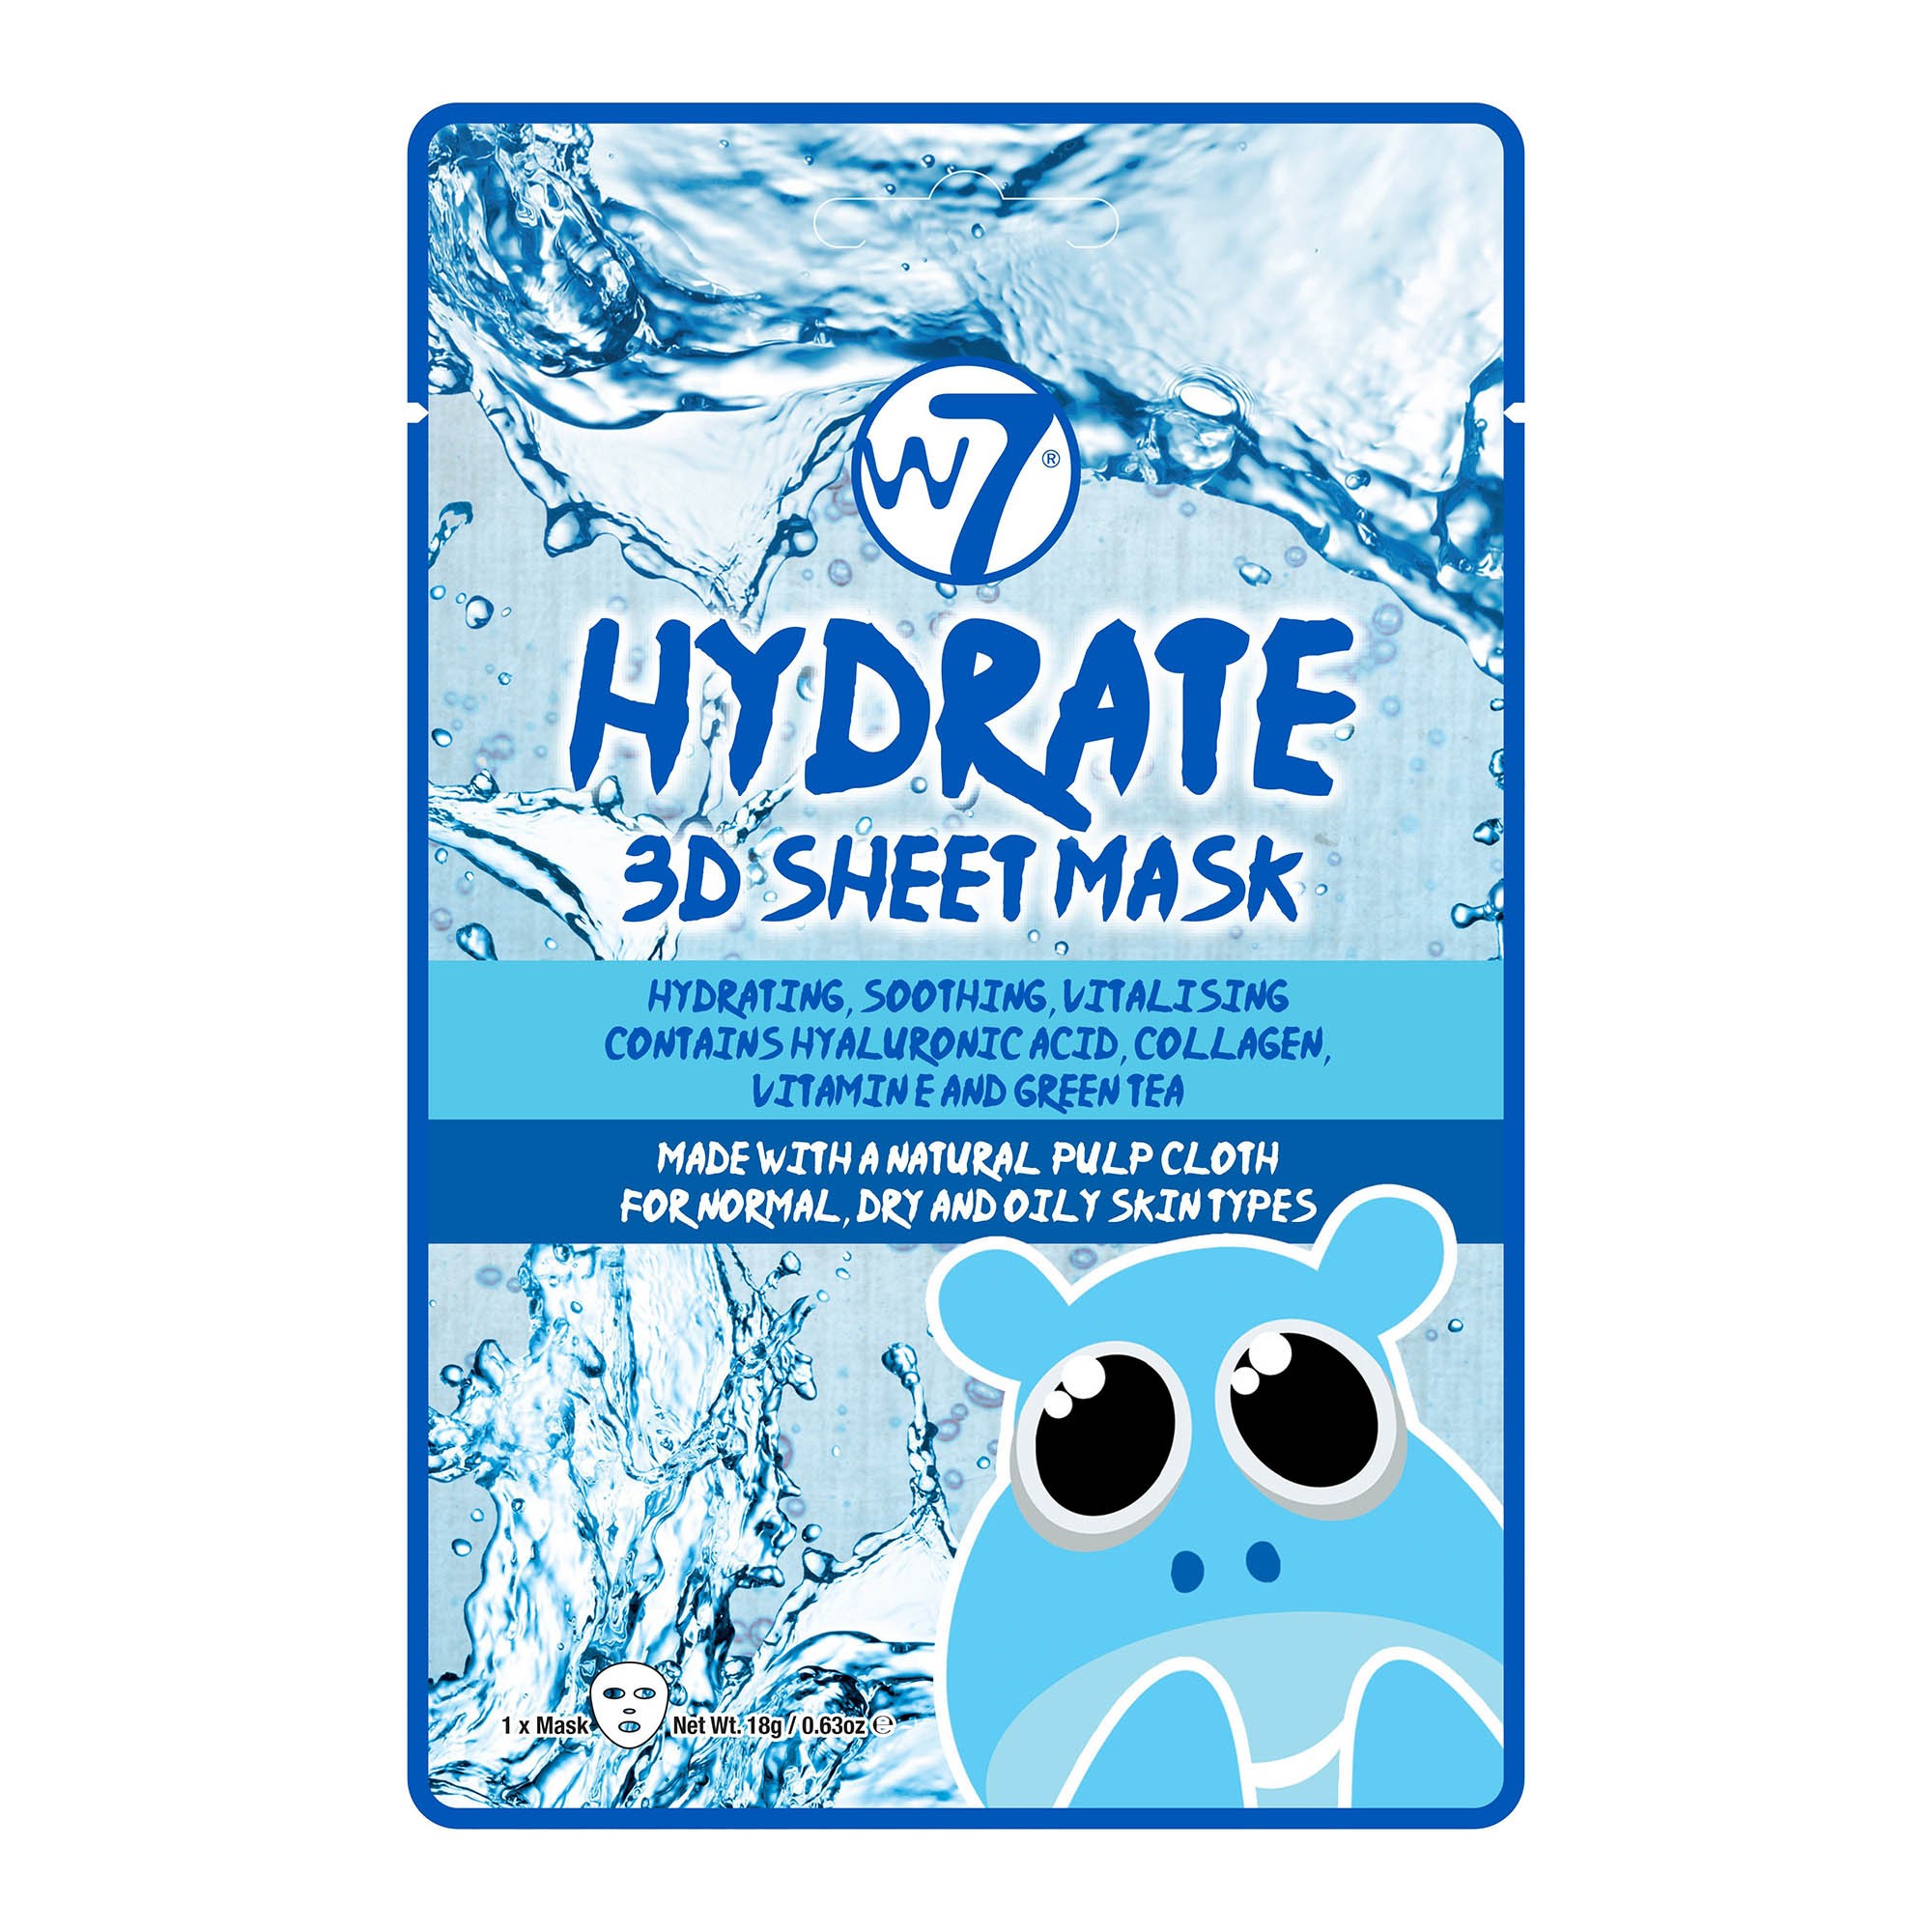 Gesichtsmaske - Hydrate 3D Sheet Face Mask